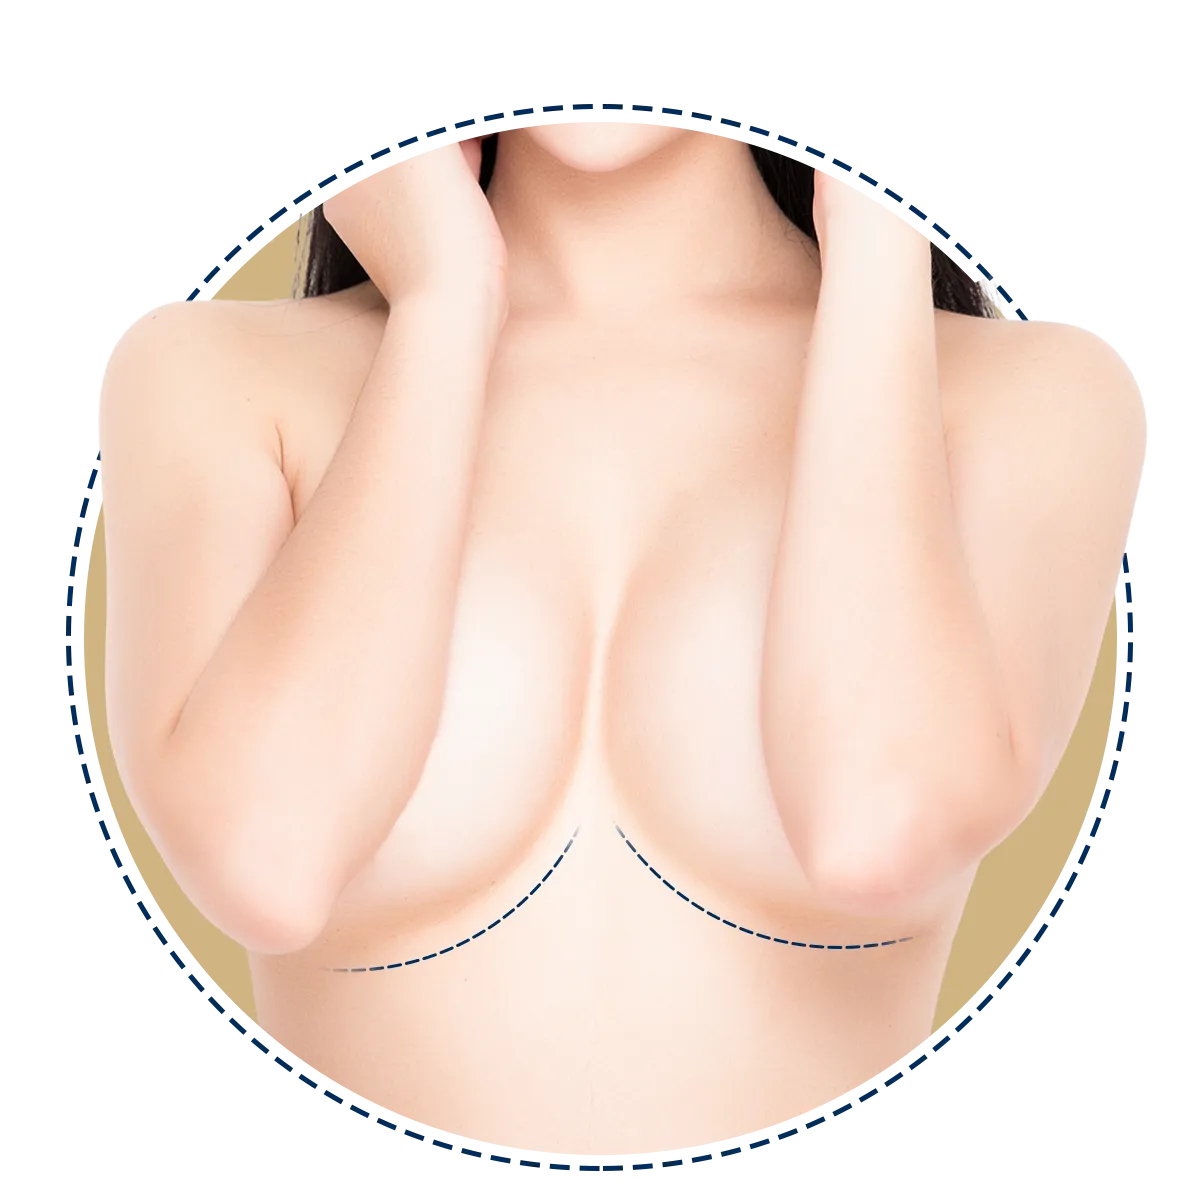 Breast Augmentation | Milada Plastic Surgery Hospital 